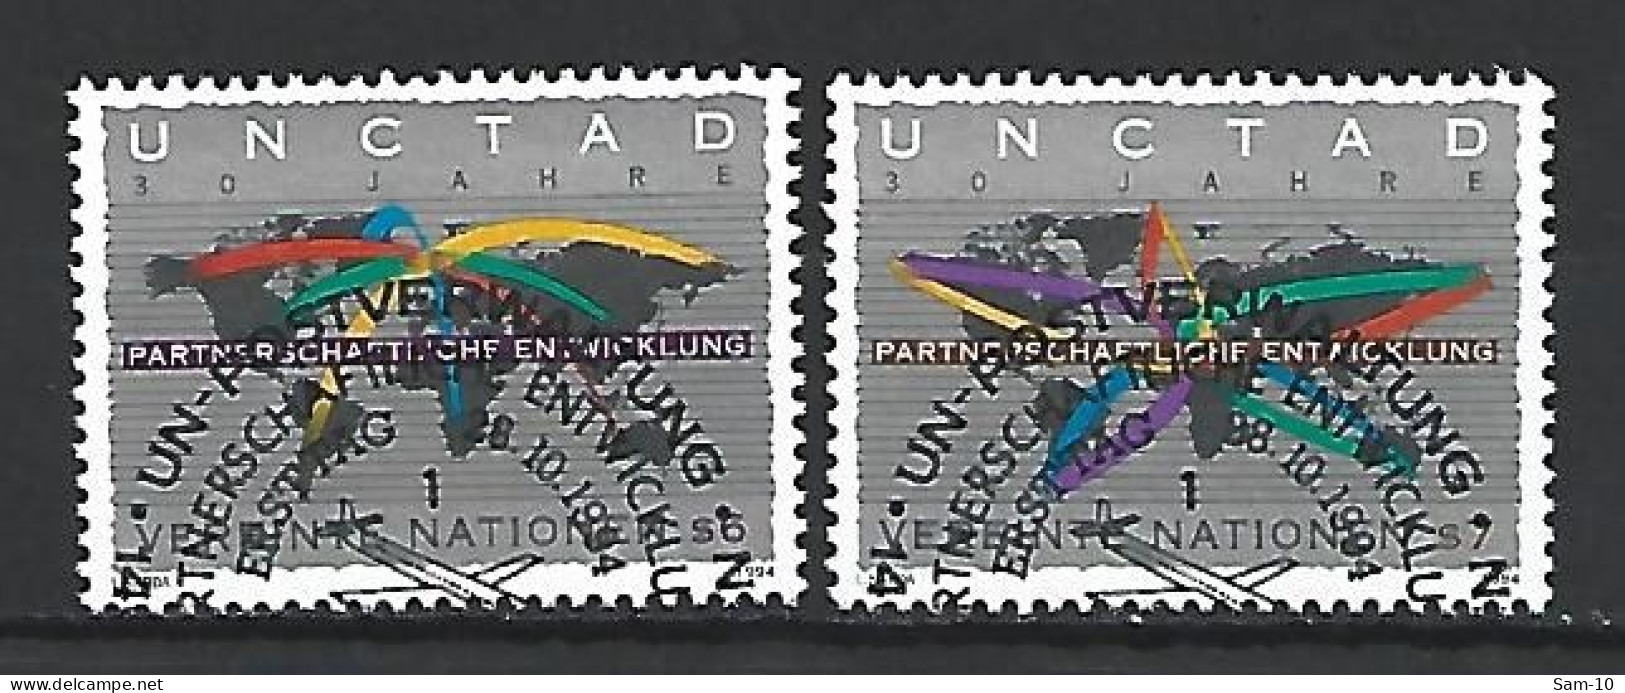 Timbres Nations-Unies Vienne Oblitéré N 196 / 197 - Usados